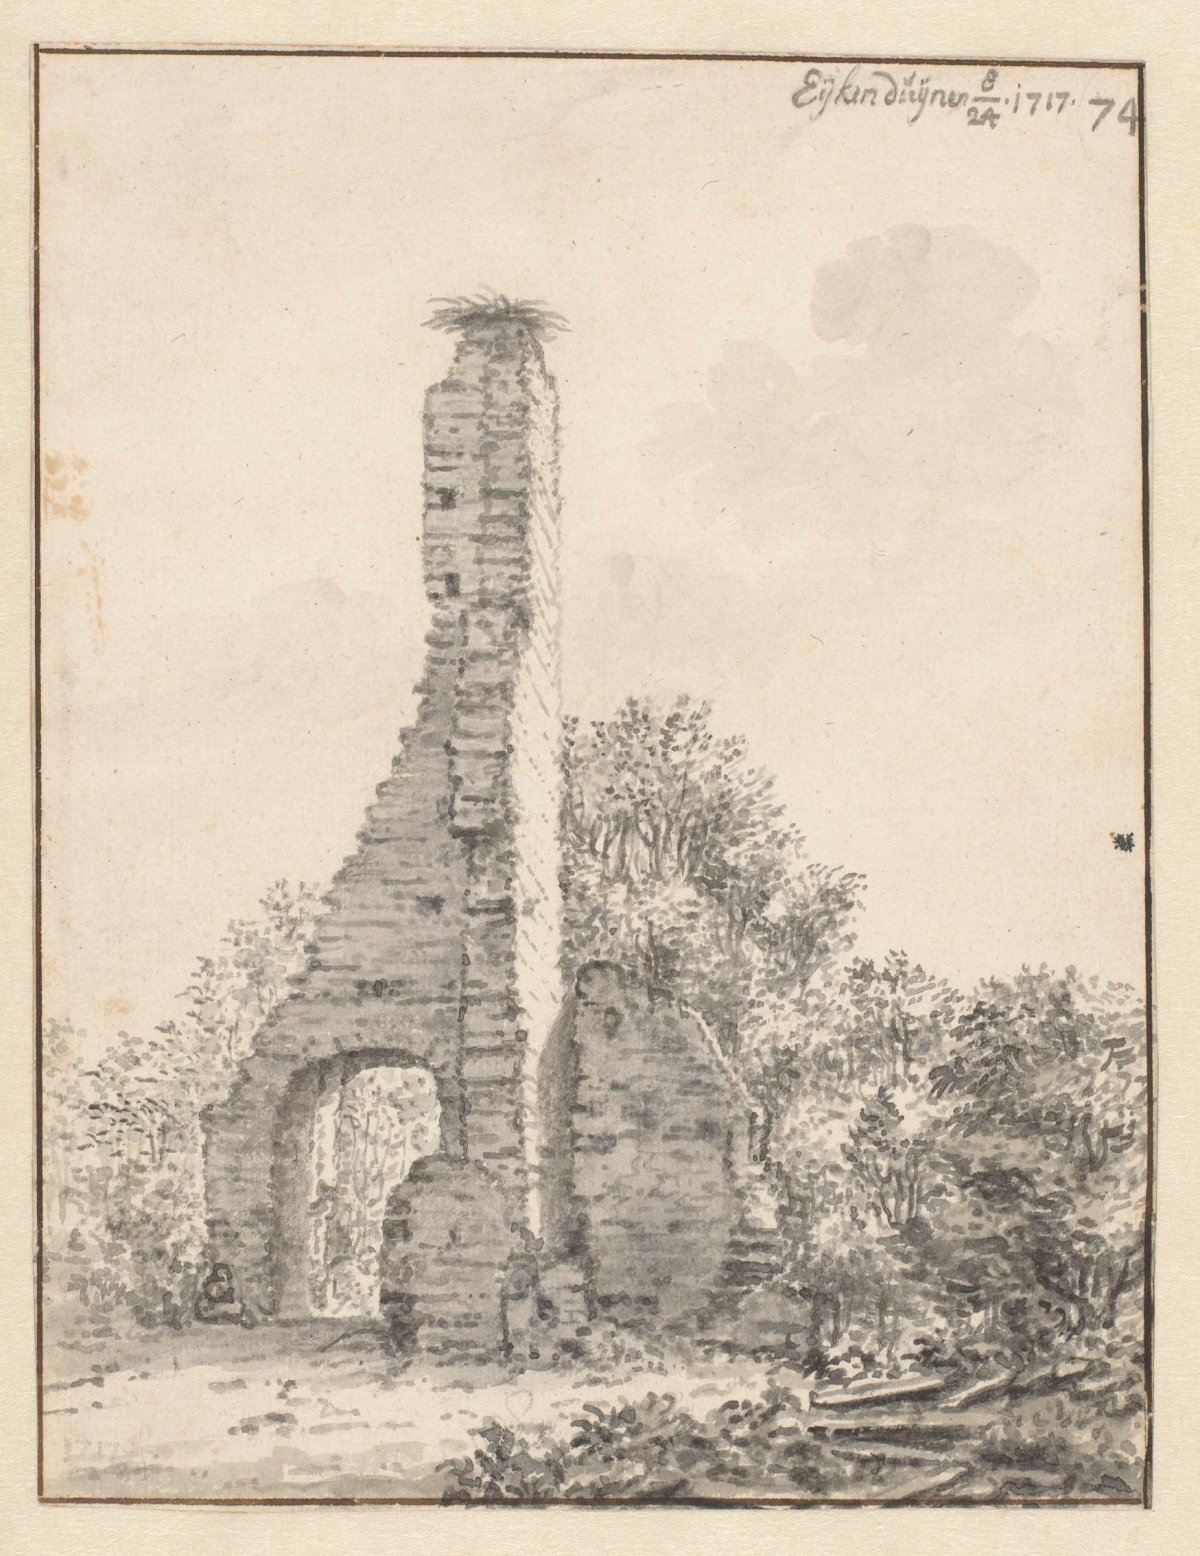 The Ruin of the Church of Eik en Duinen near The Hague, Valentijn Klotz, 1717